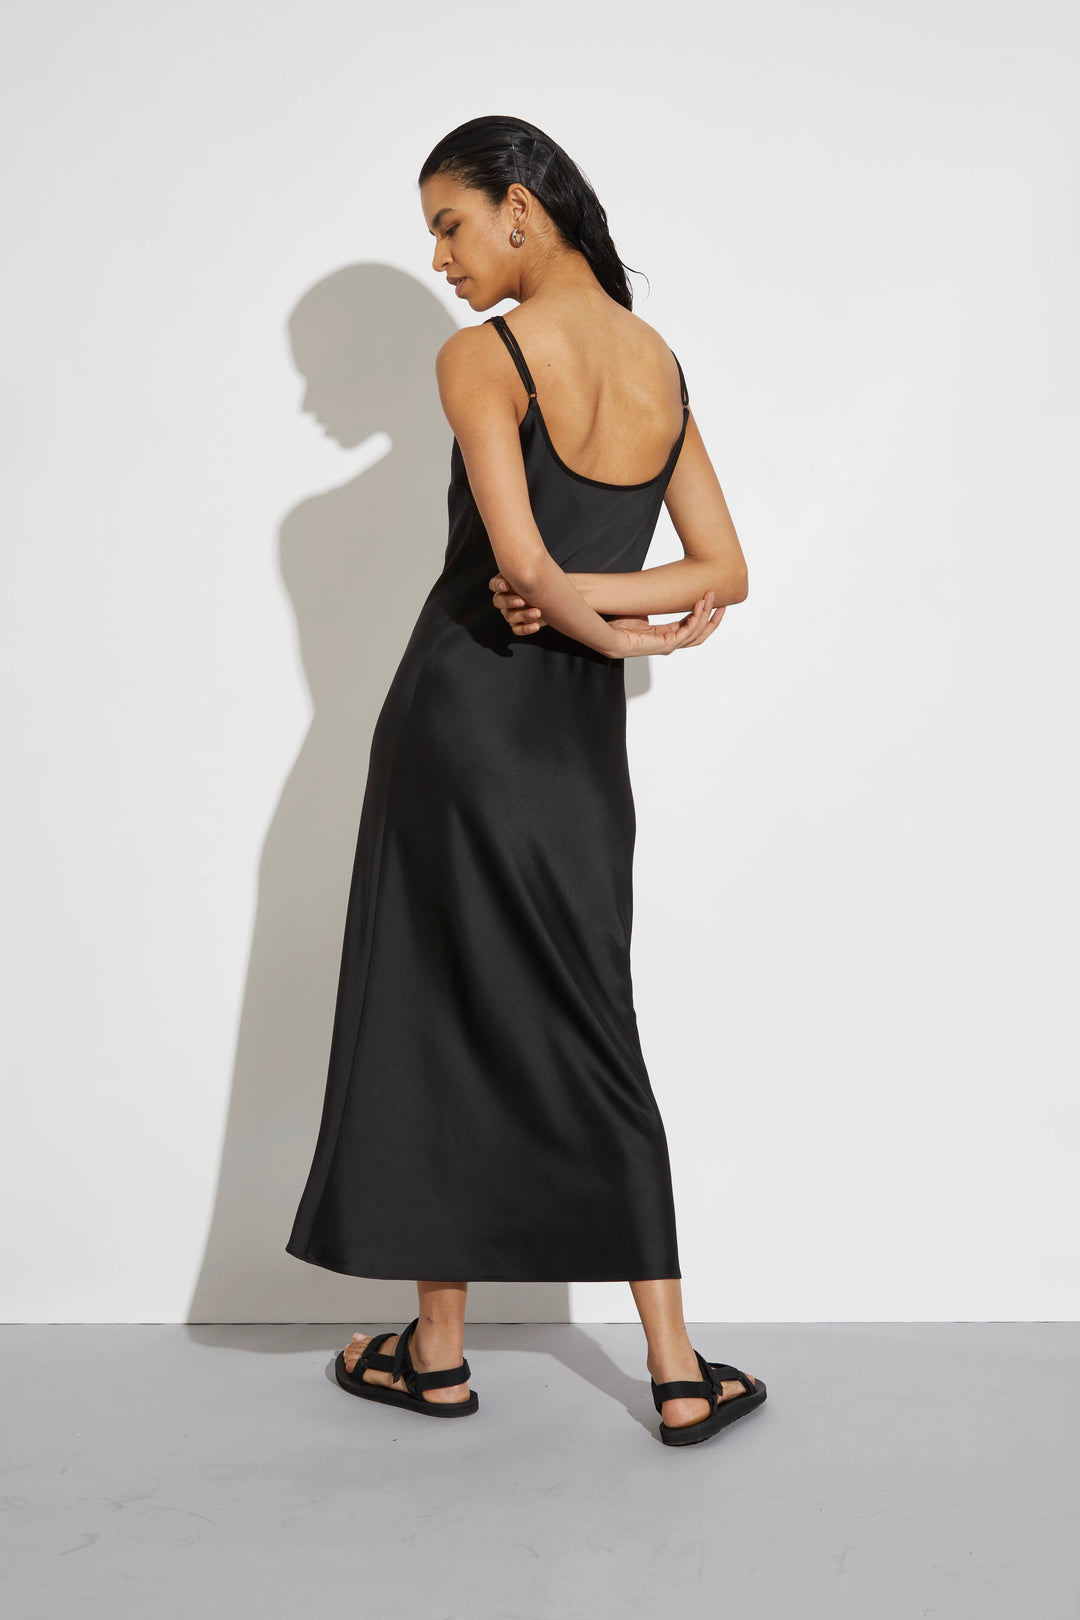 Saint Art New York - Haley Slip Dress in Black